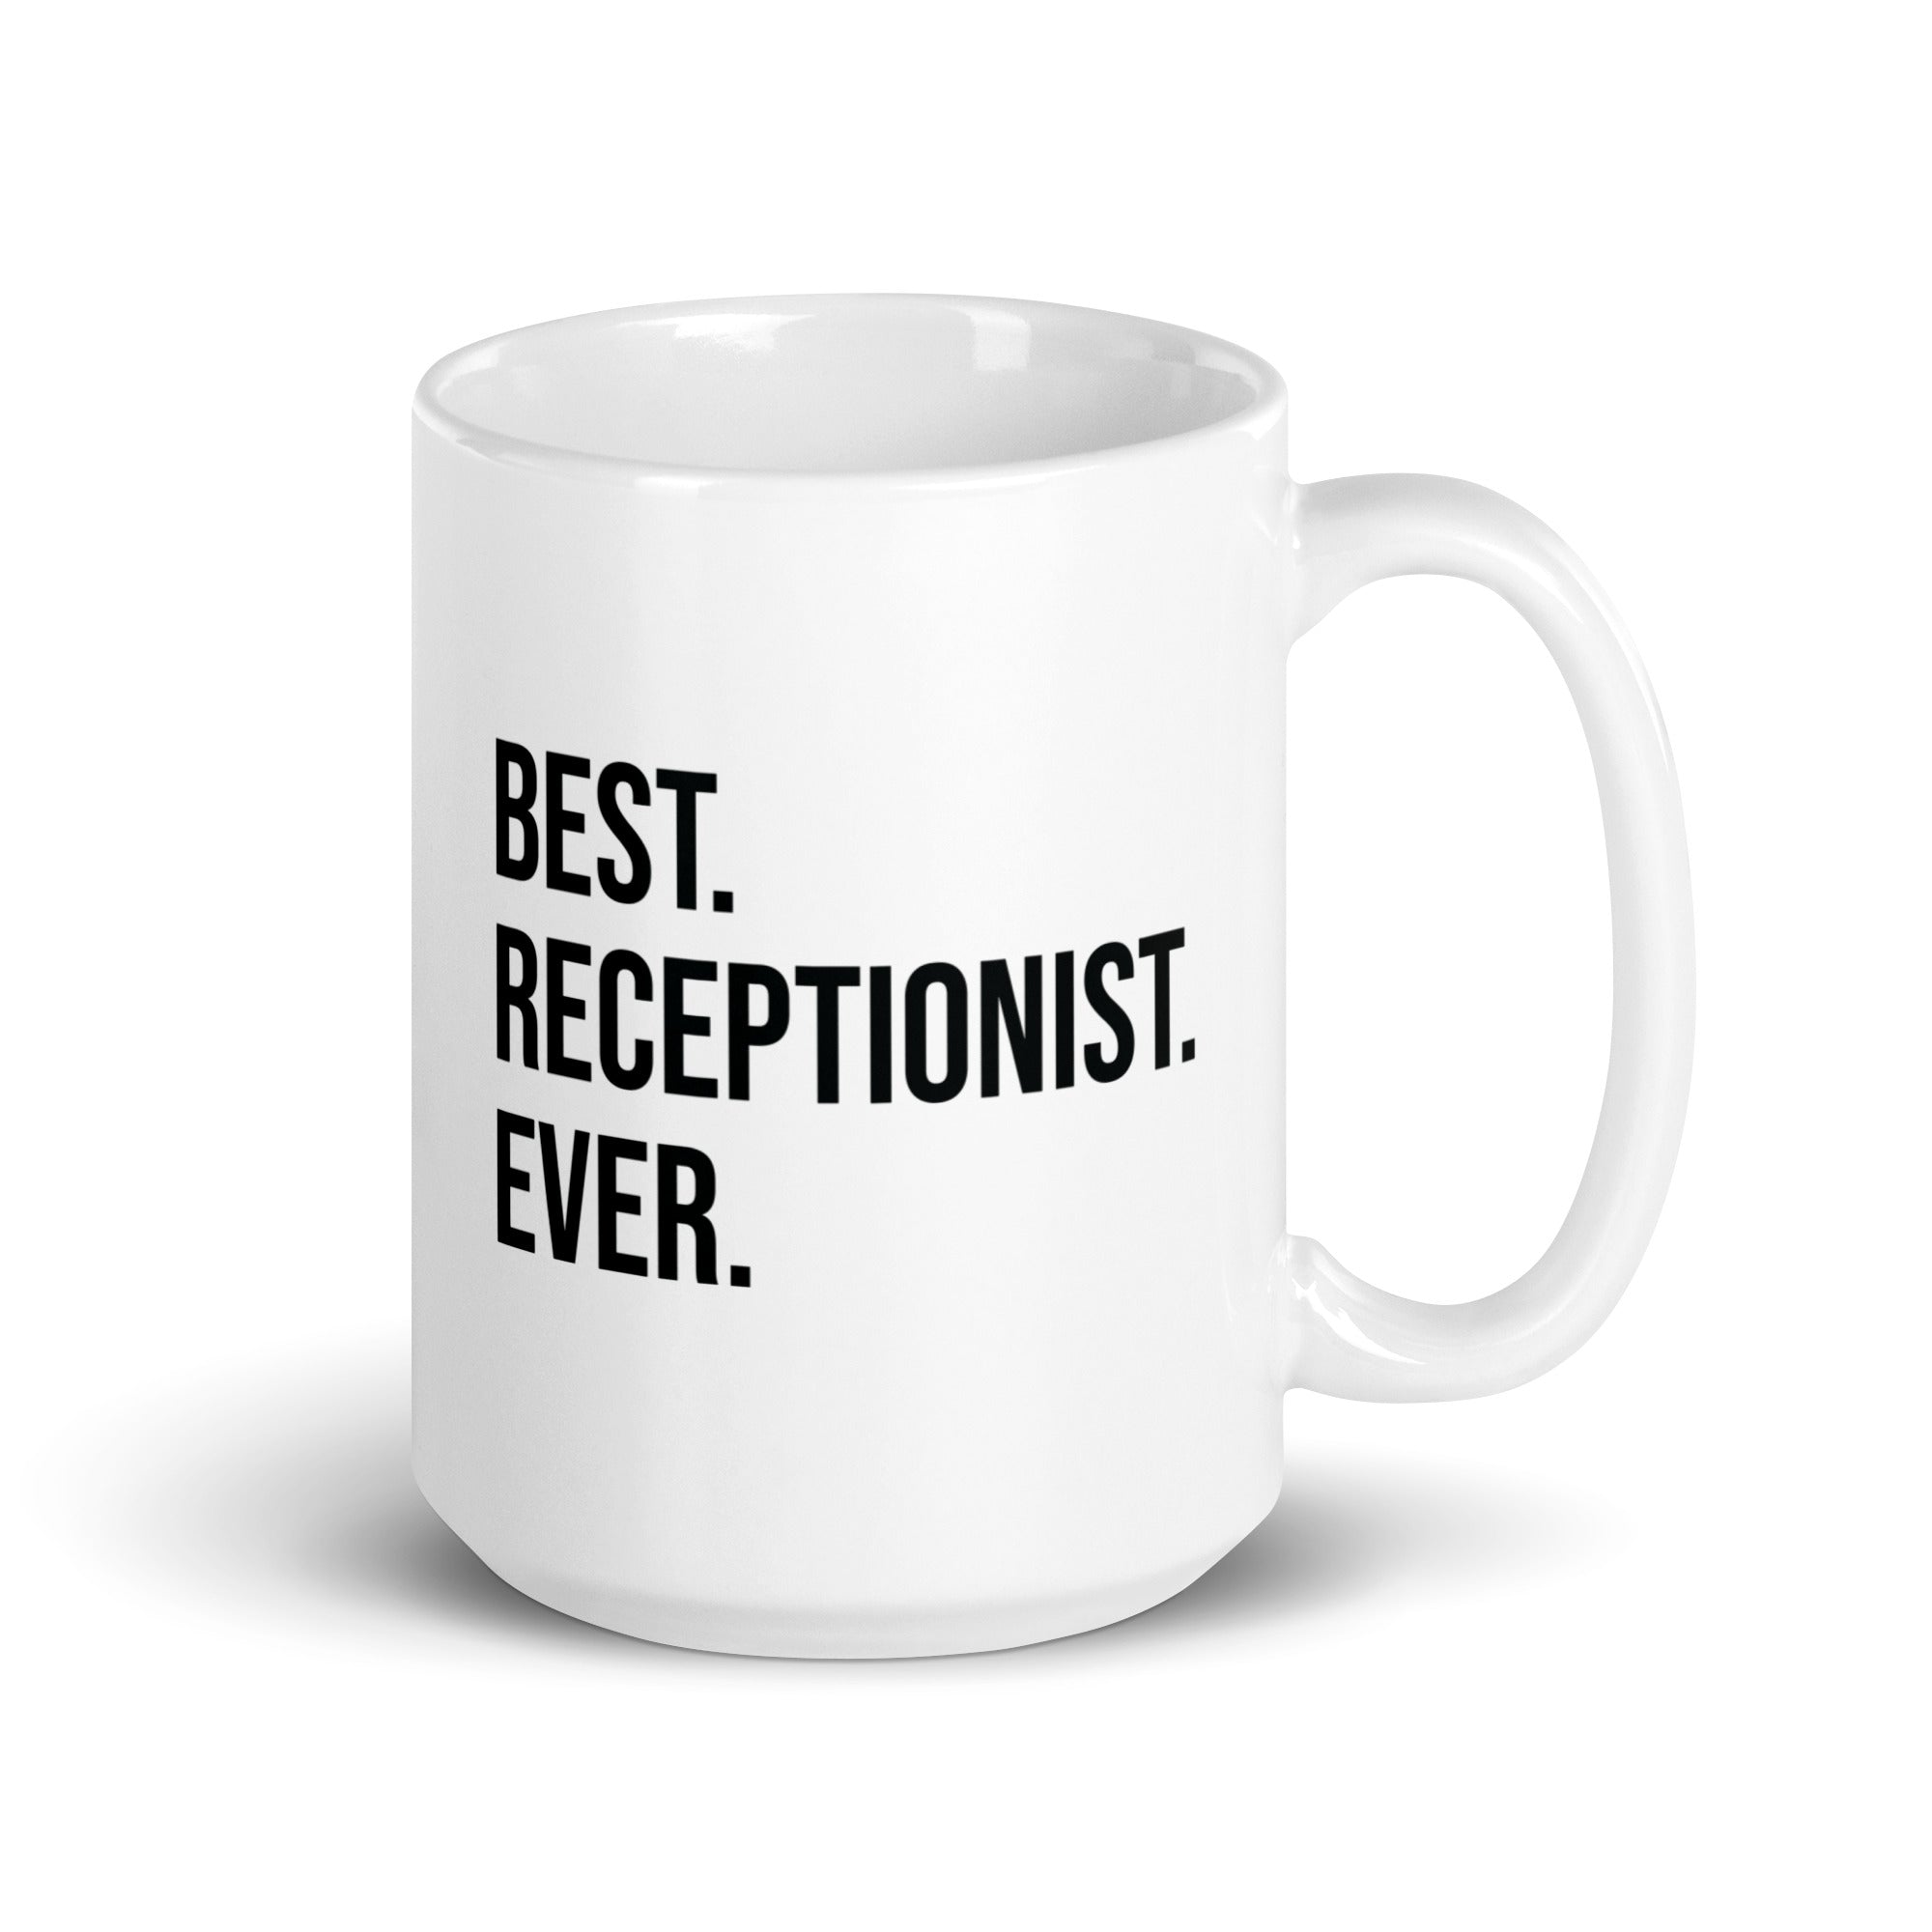 White glossy mug | Best. Receptionist. Ever.